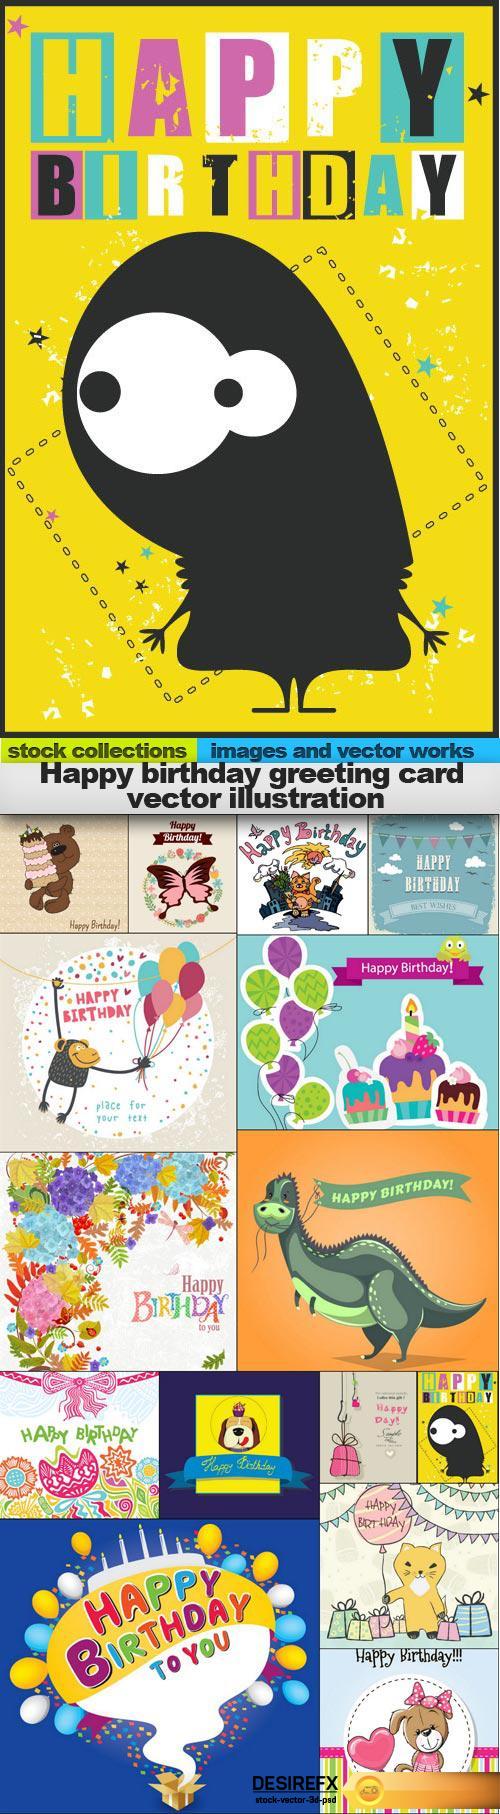 Happy birthday greeting card vector illustration, 15 x EPS